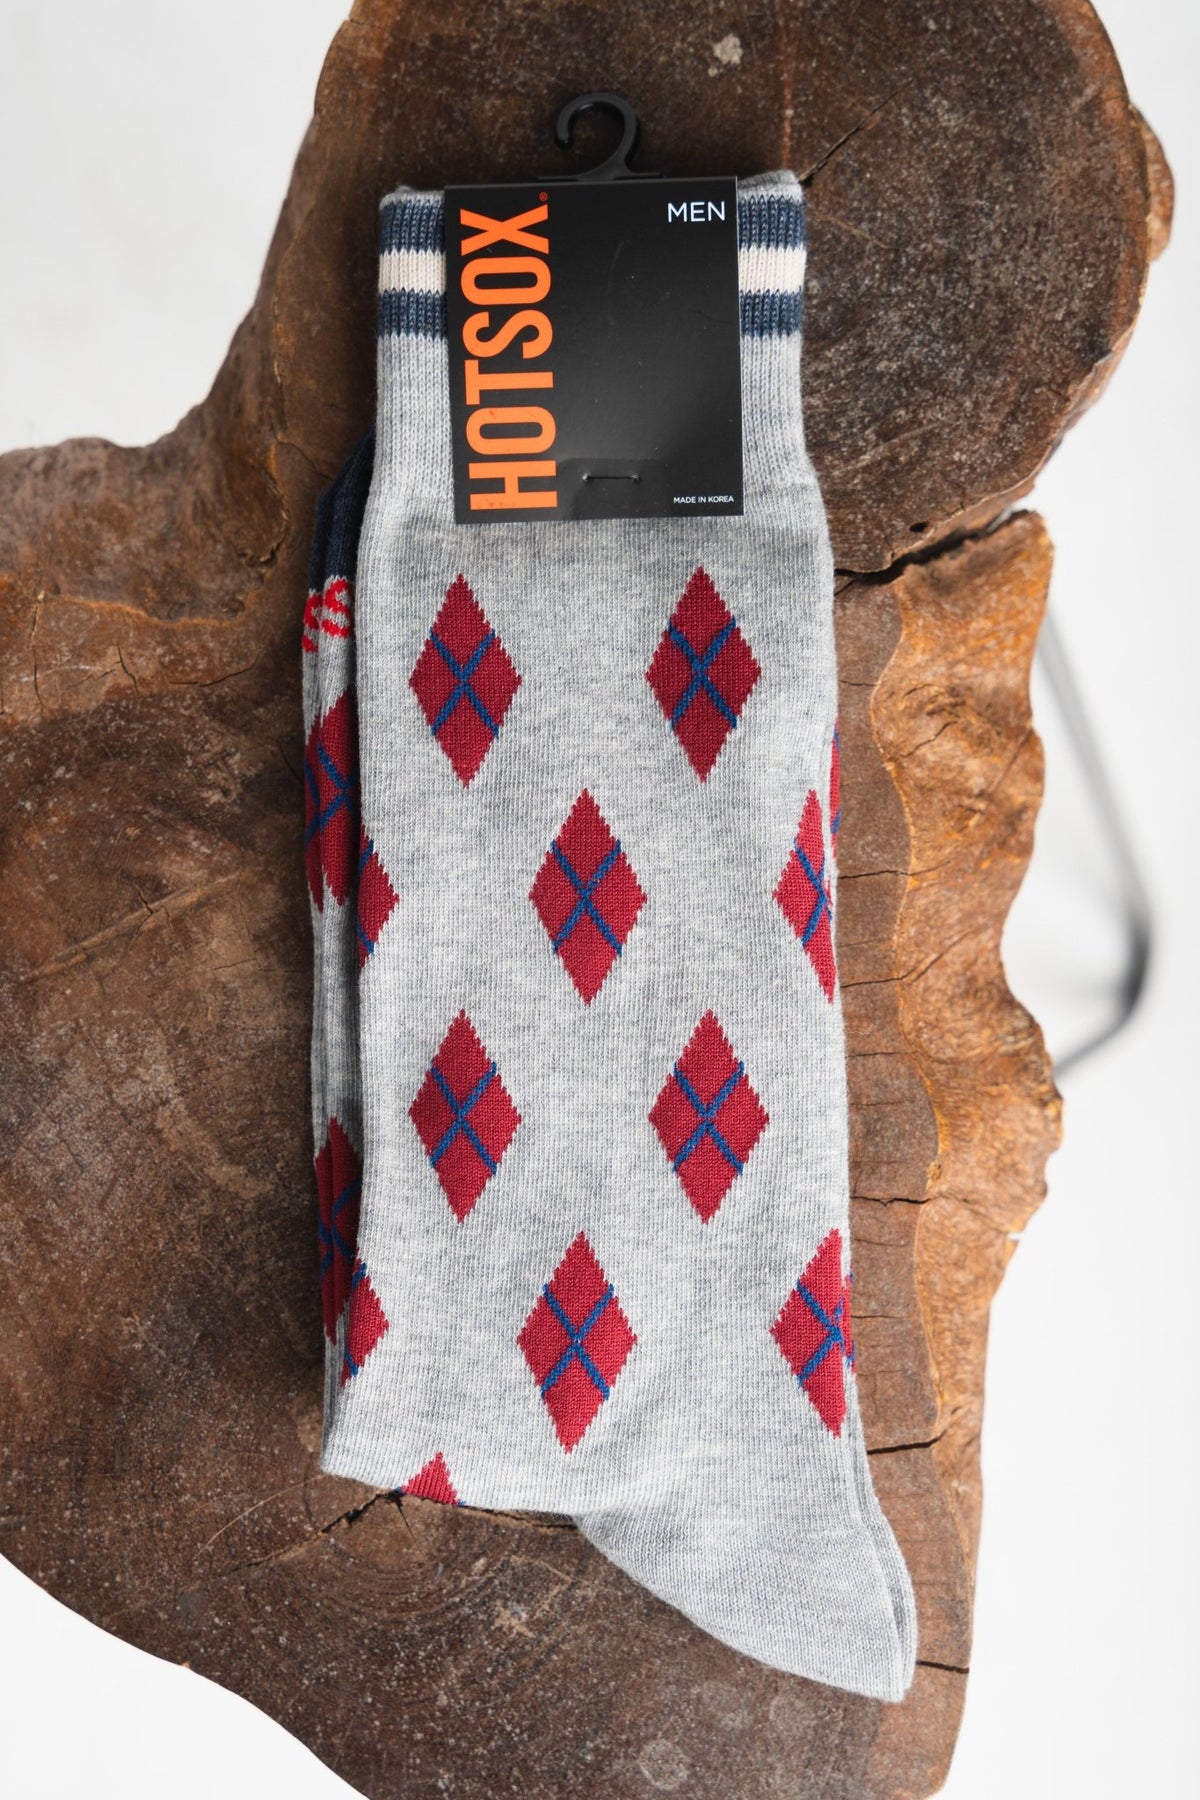 HotSox argyle men's socks - Trendy Socks at Lush Fashion Lounge Boutique in Oklahoma City